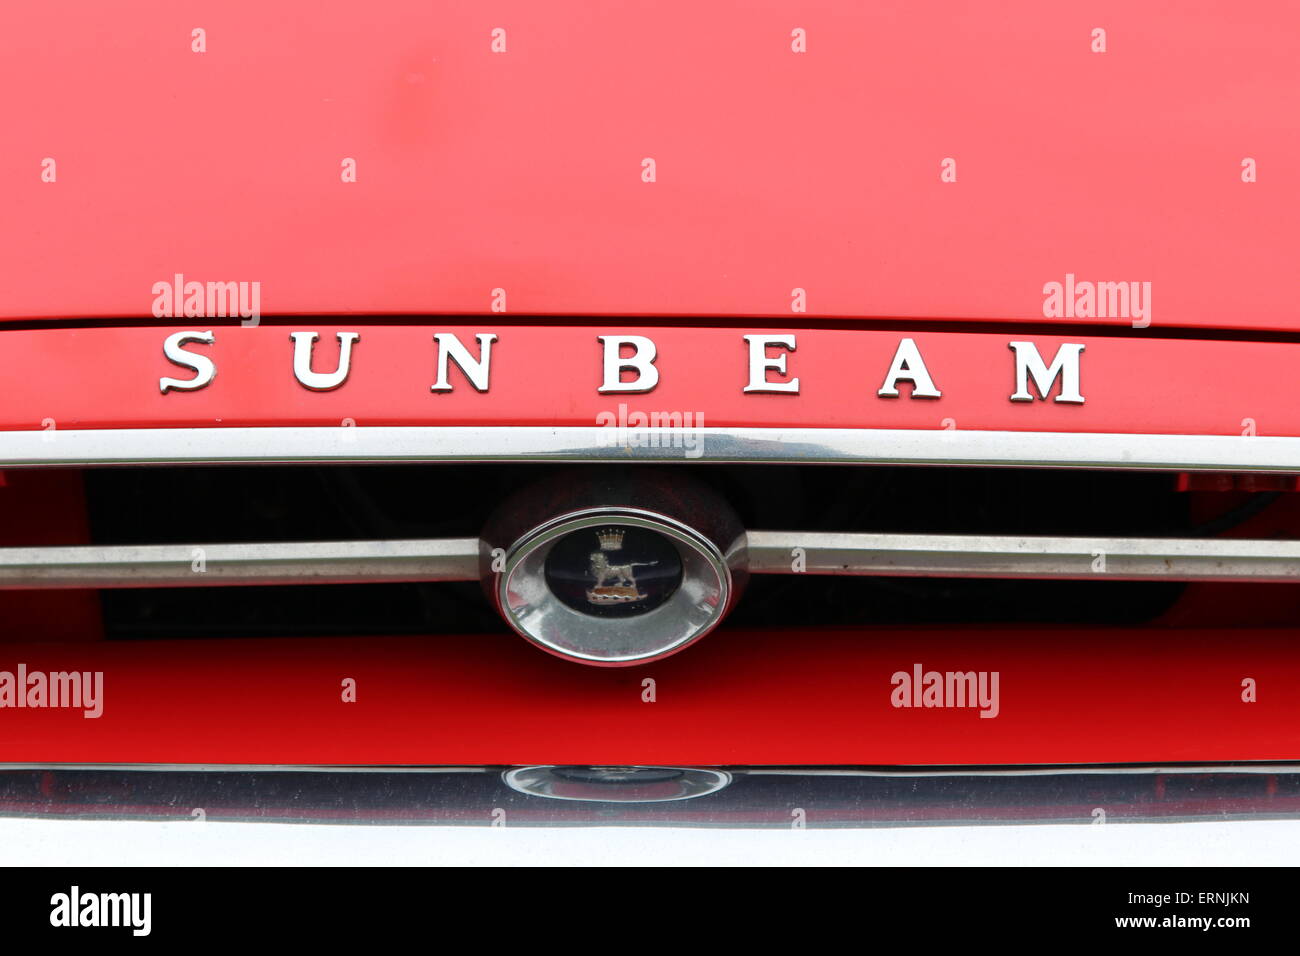 Sunbeam badge on a car bonnet Stock Photo